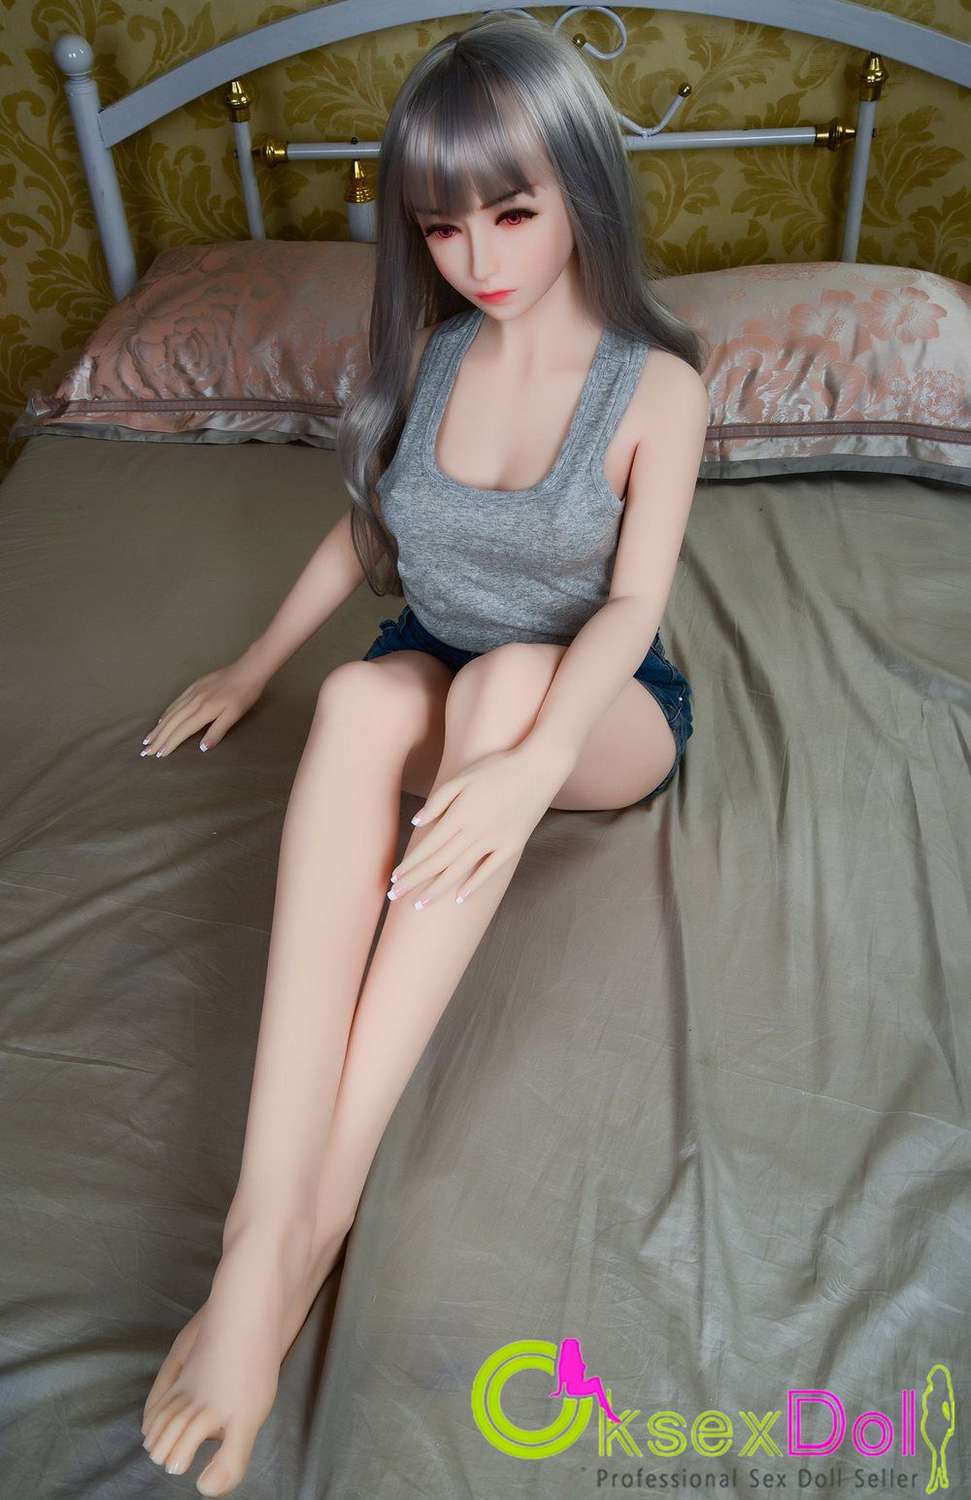 Aspen Affordable Sex Dolls Pictures